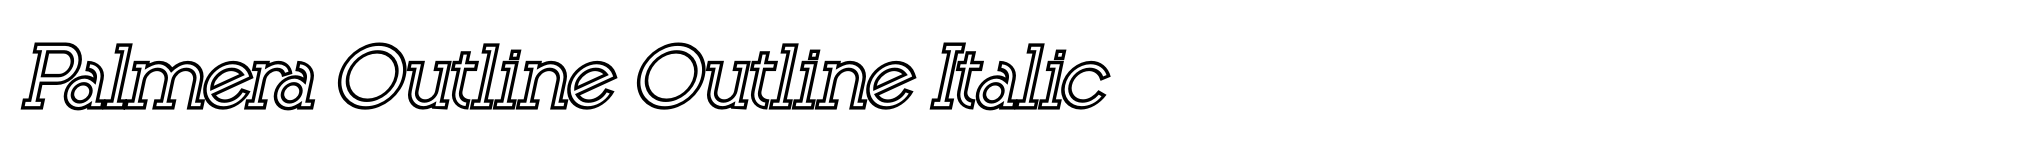 Palmera Outline Outline Italic image